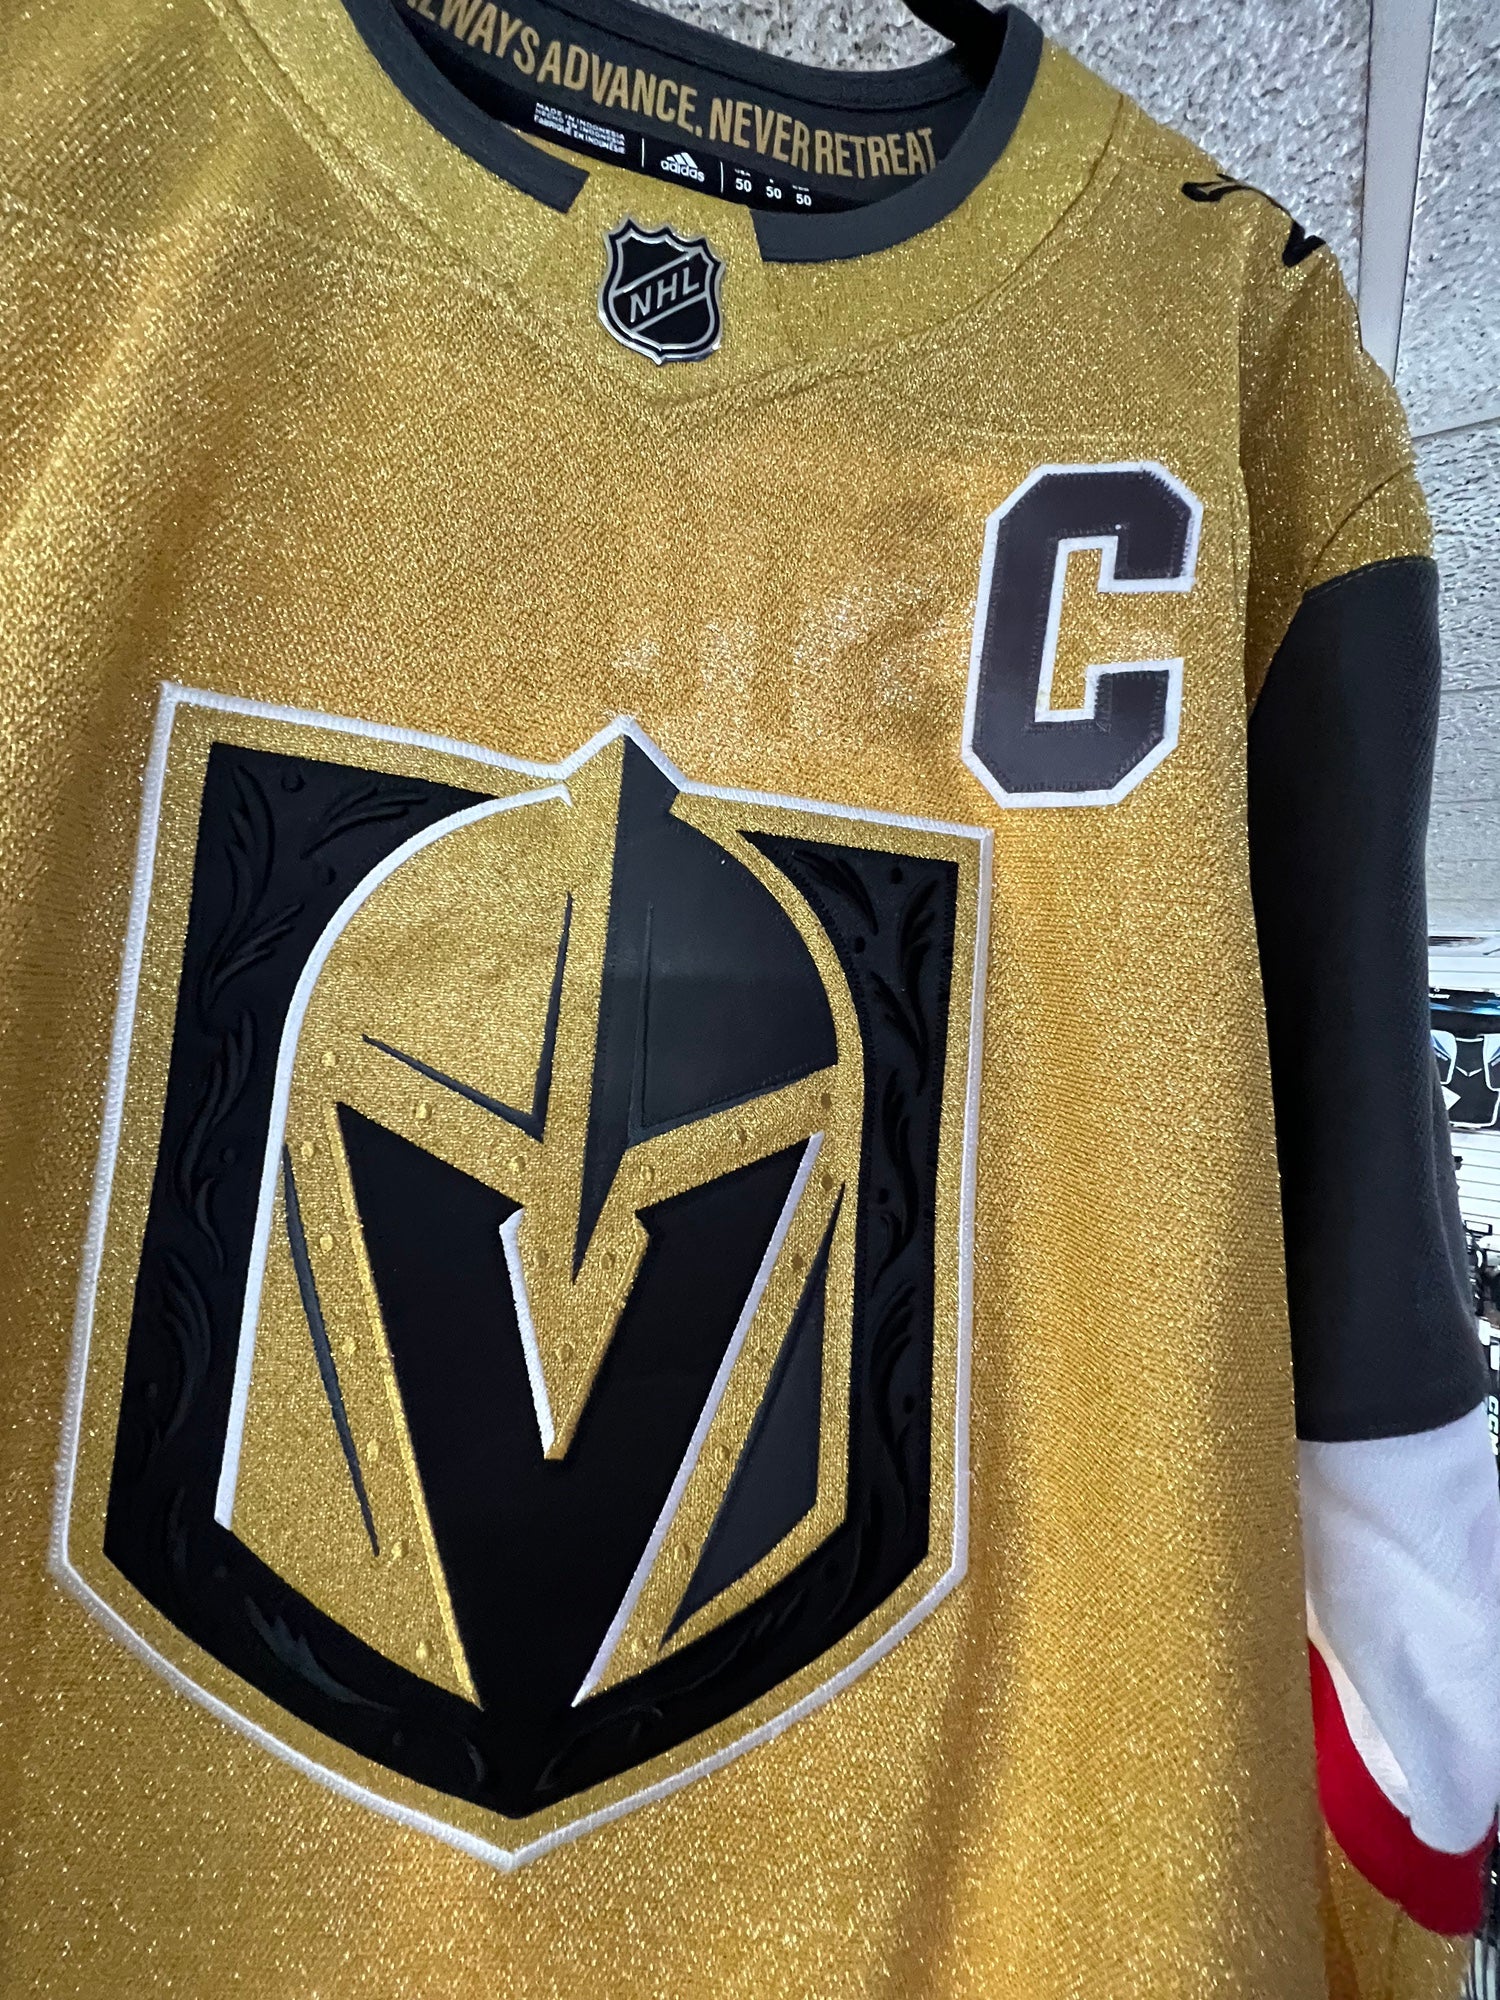 New Authentic Vegas Golden Knights Adidas Hockey Jersey - Mark Stone